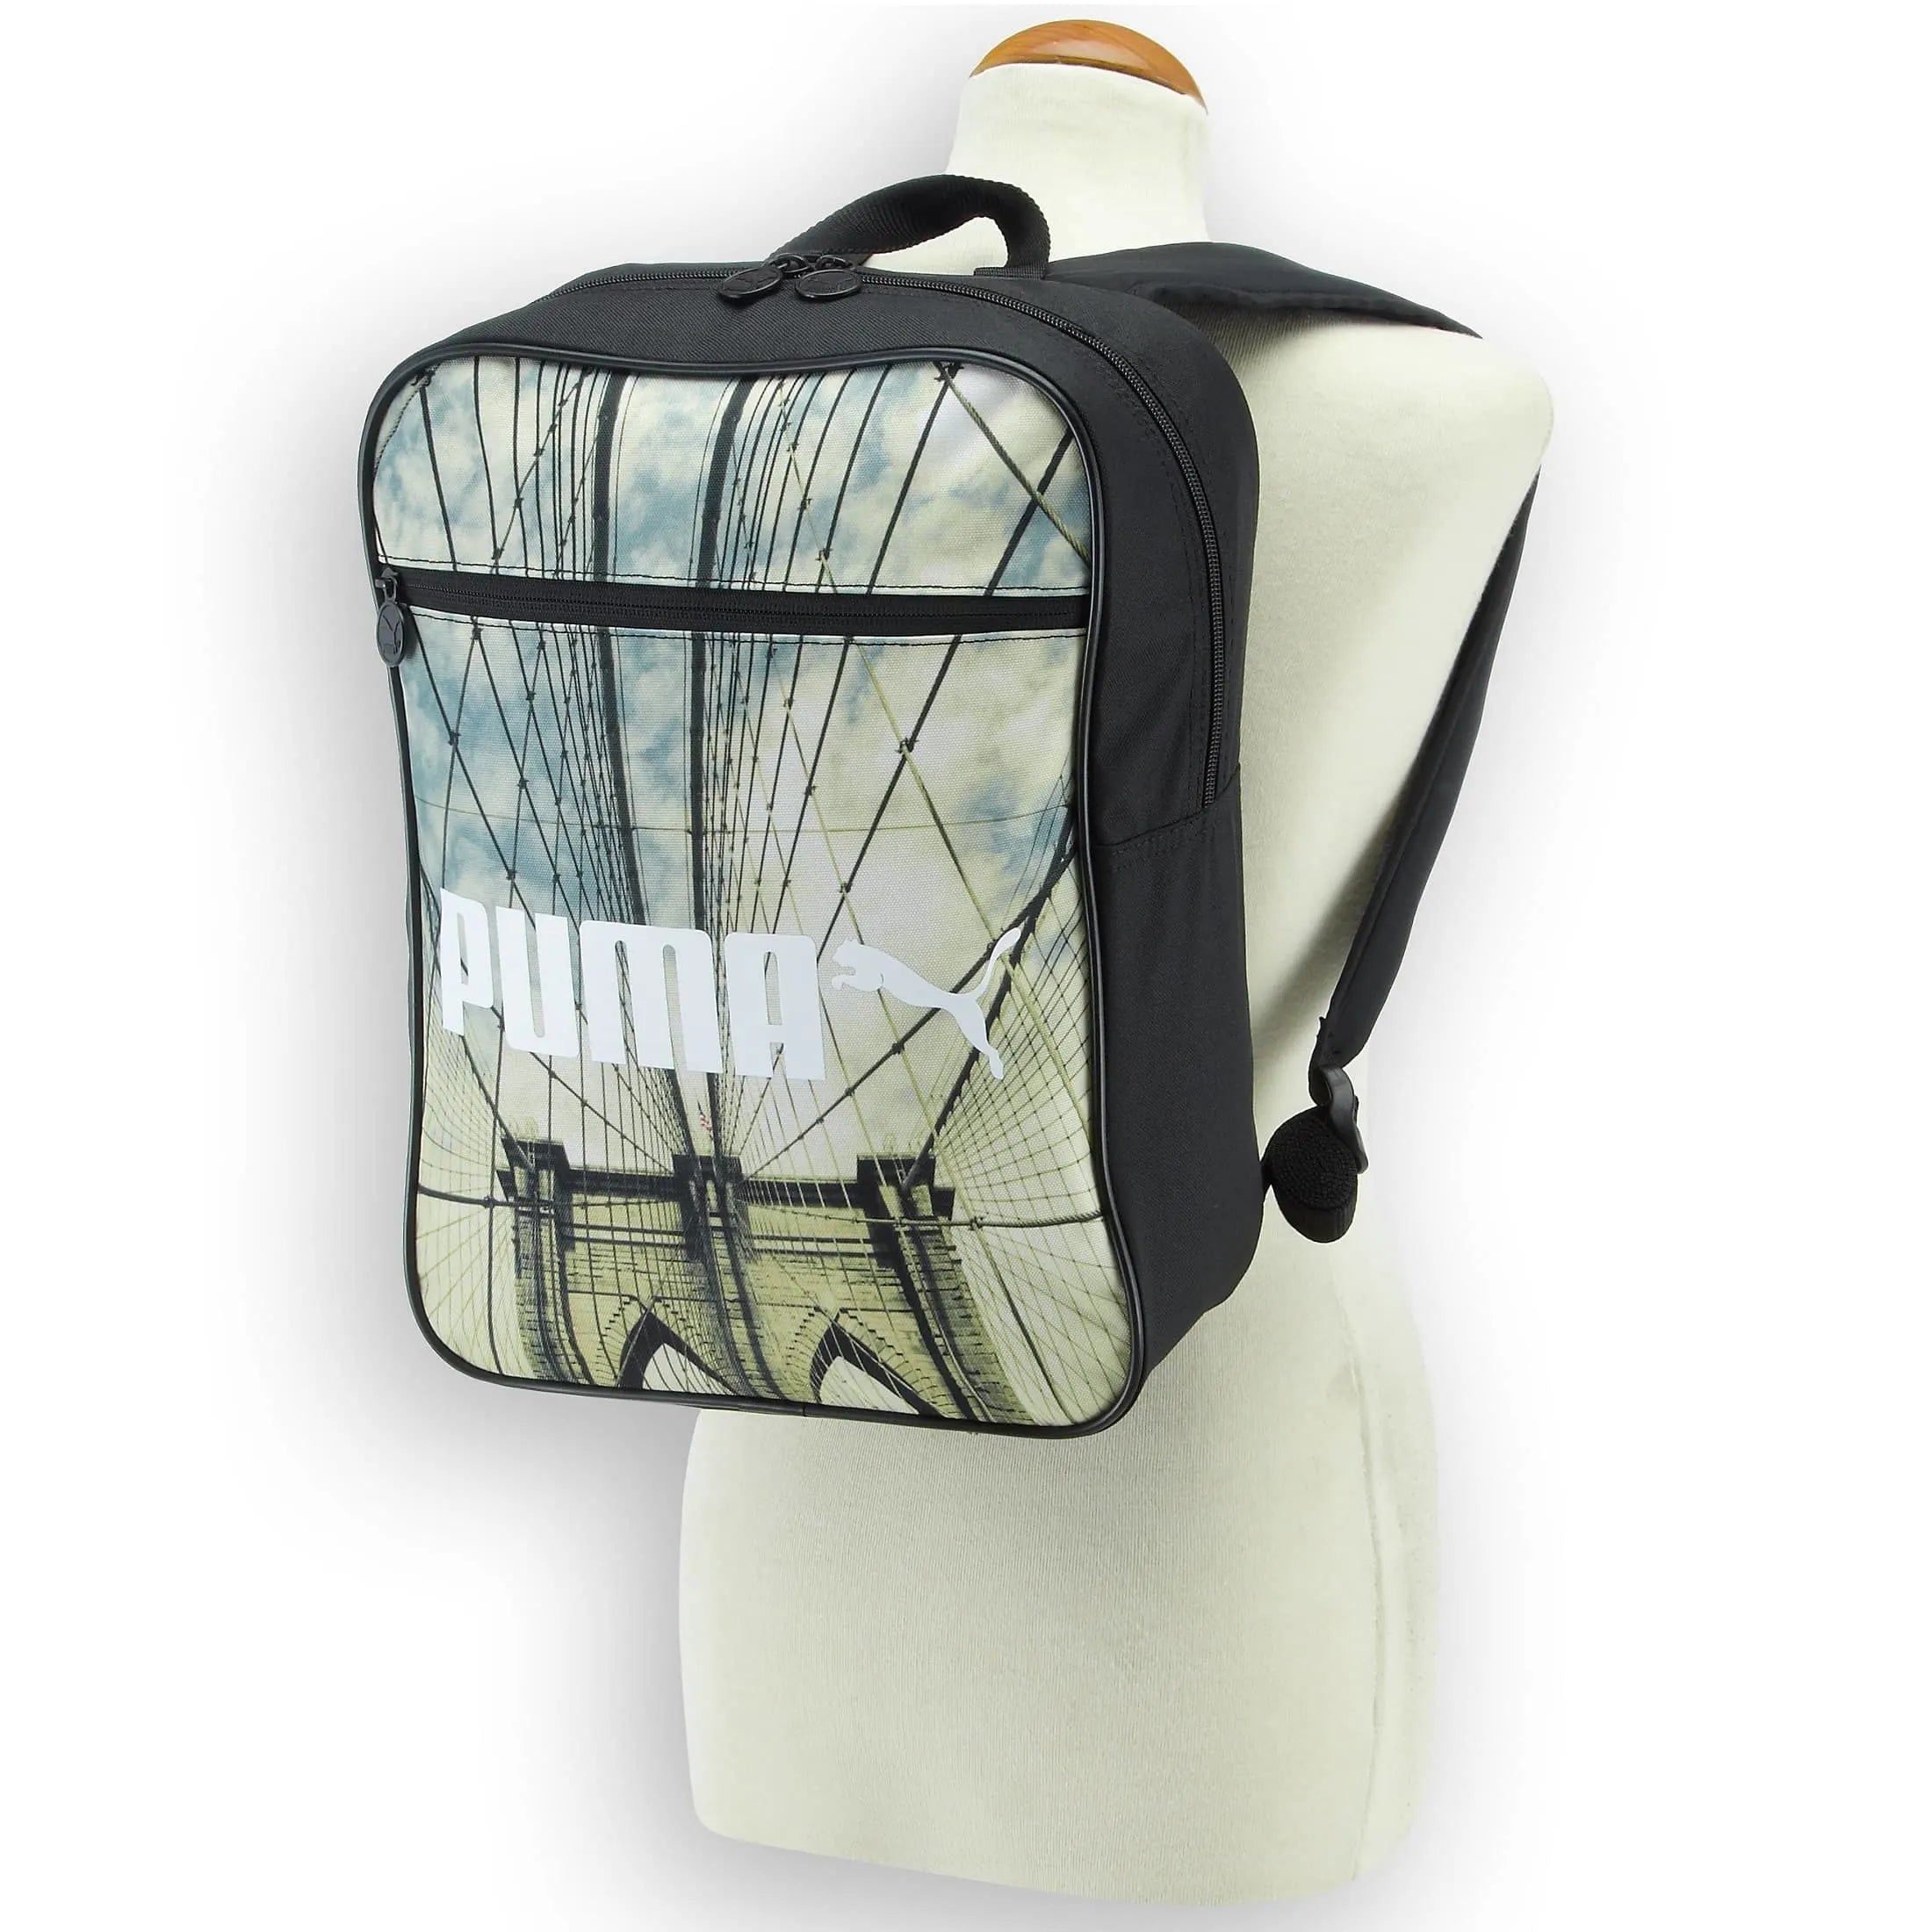 Puma Ftpa Campus backpack 39 cm - puma black-bridge graphic